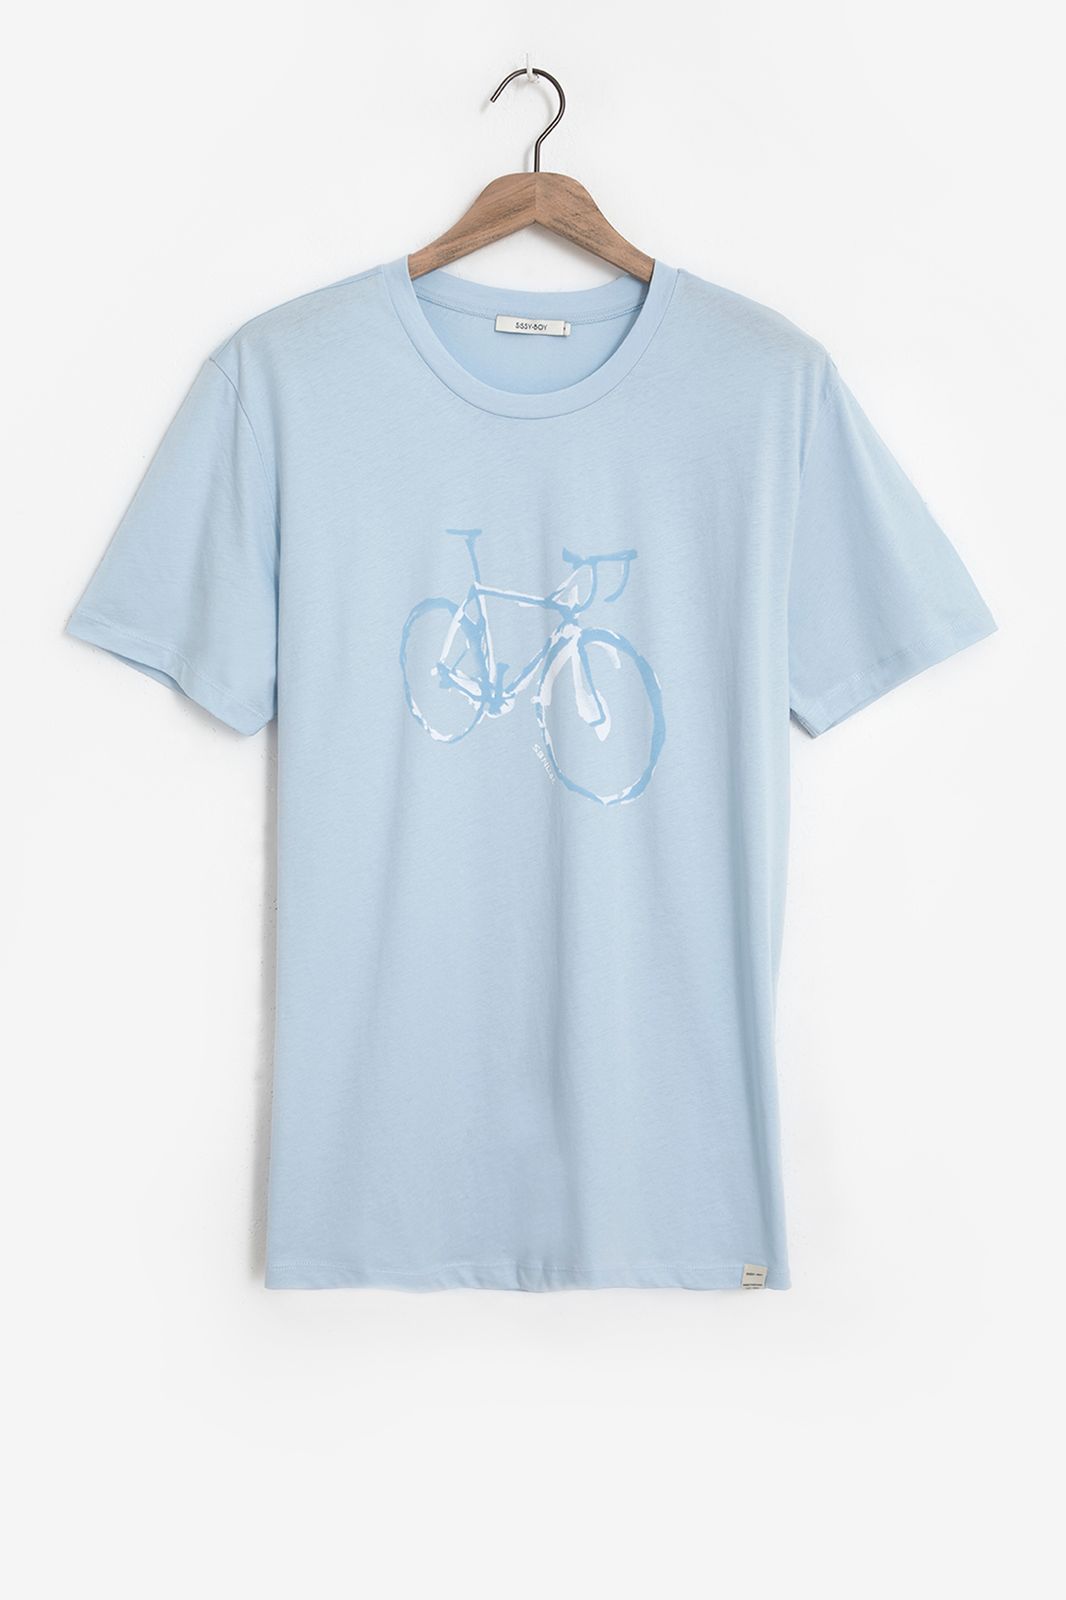 Baumwoll-Shirt mit Fahrrad-Print - hellblau